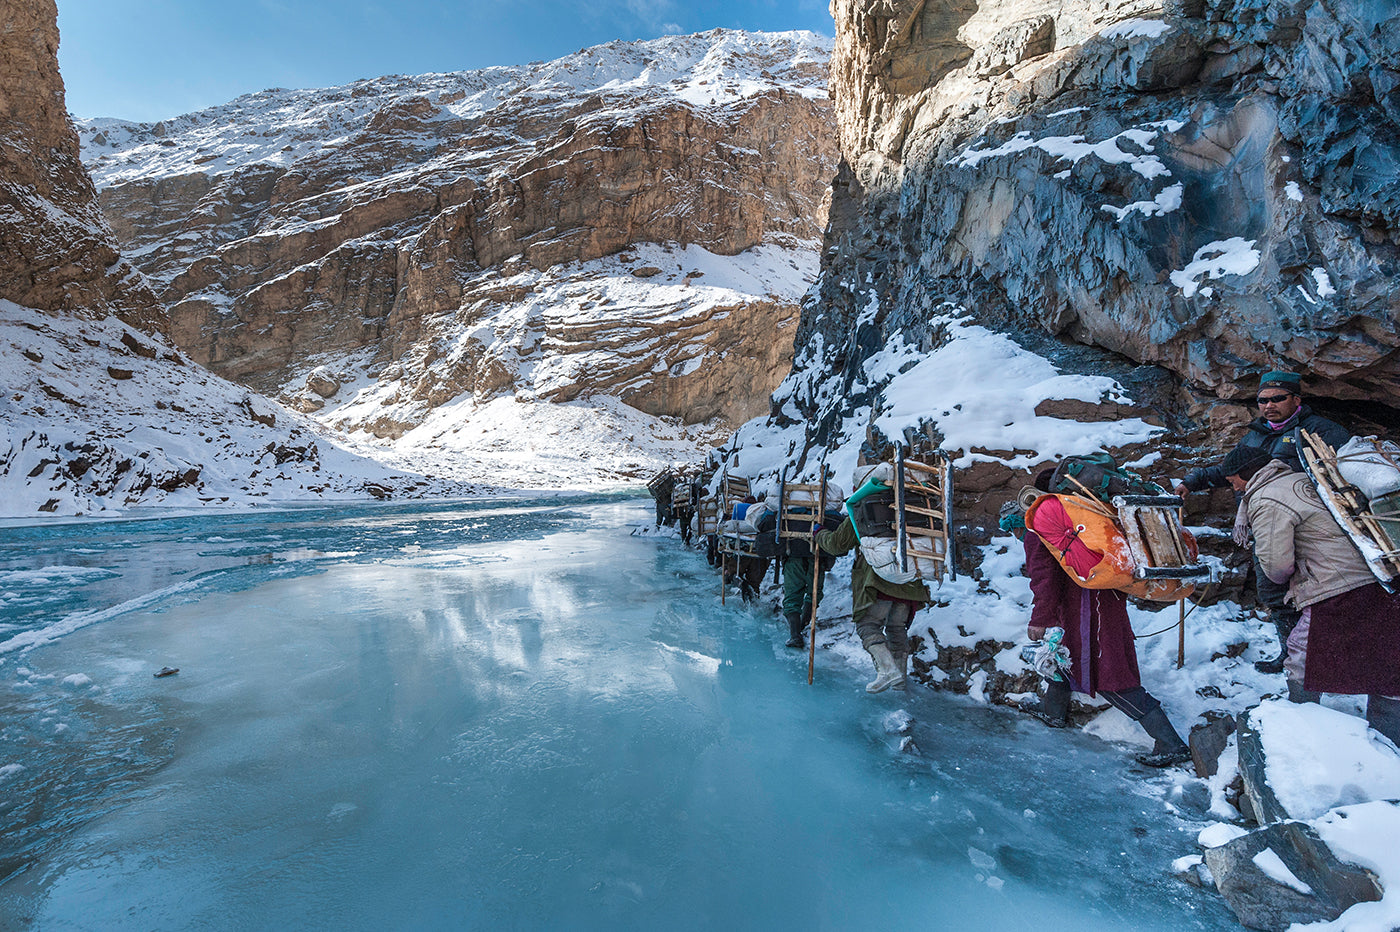 People hiking on the Chadar Trek along the frozen Zanskar River in northern India. (Photo: Manish Lakhani)